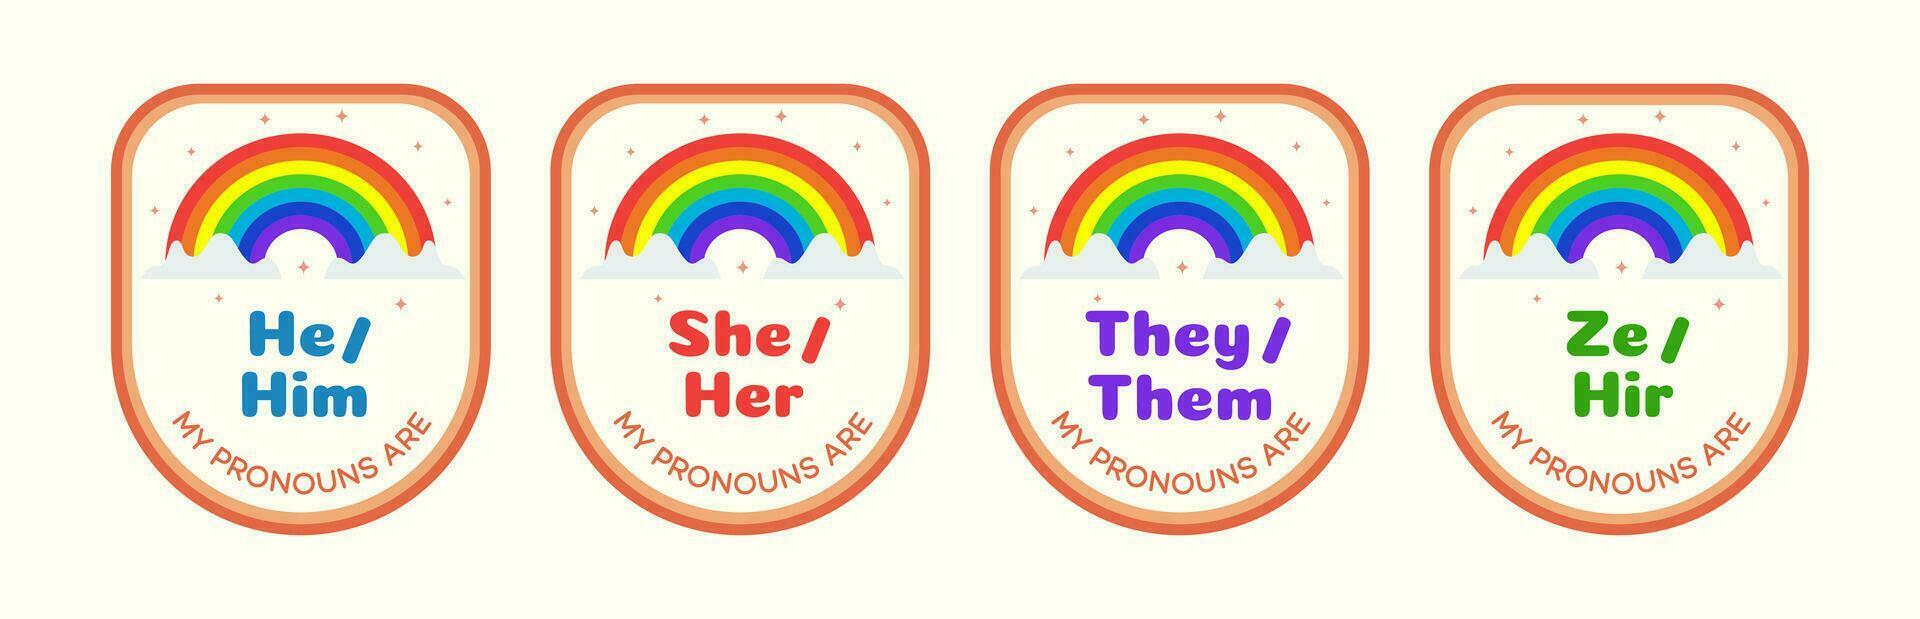 Pronouns sticker set with rainbow vector